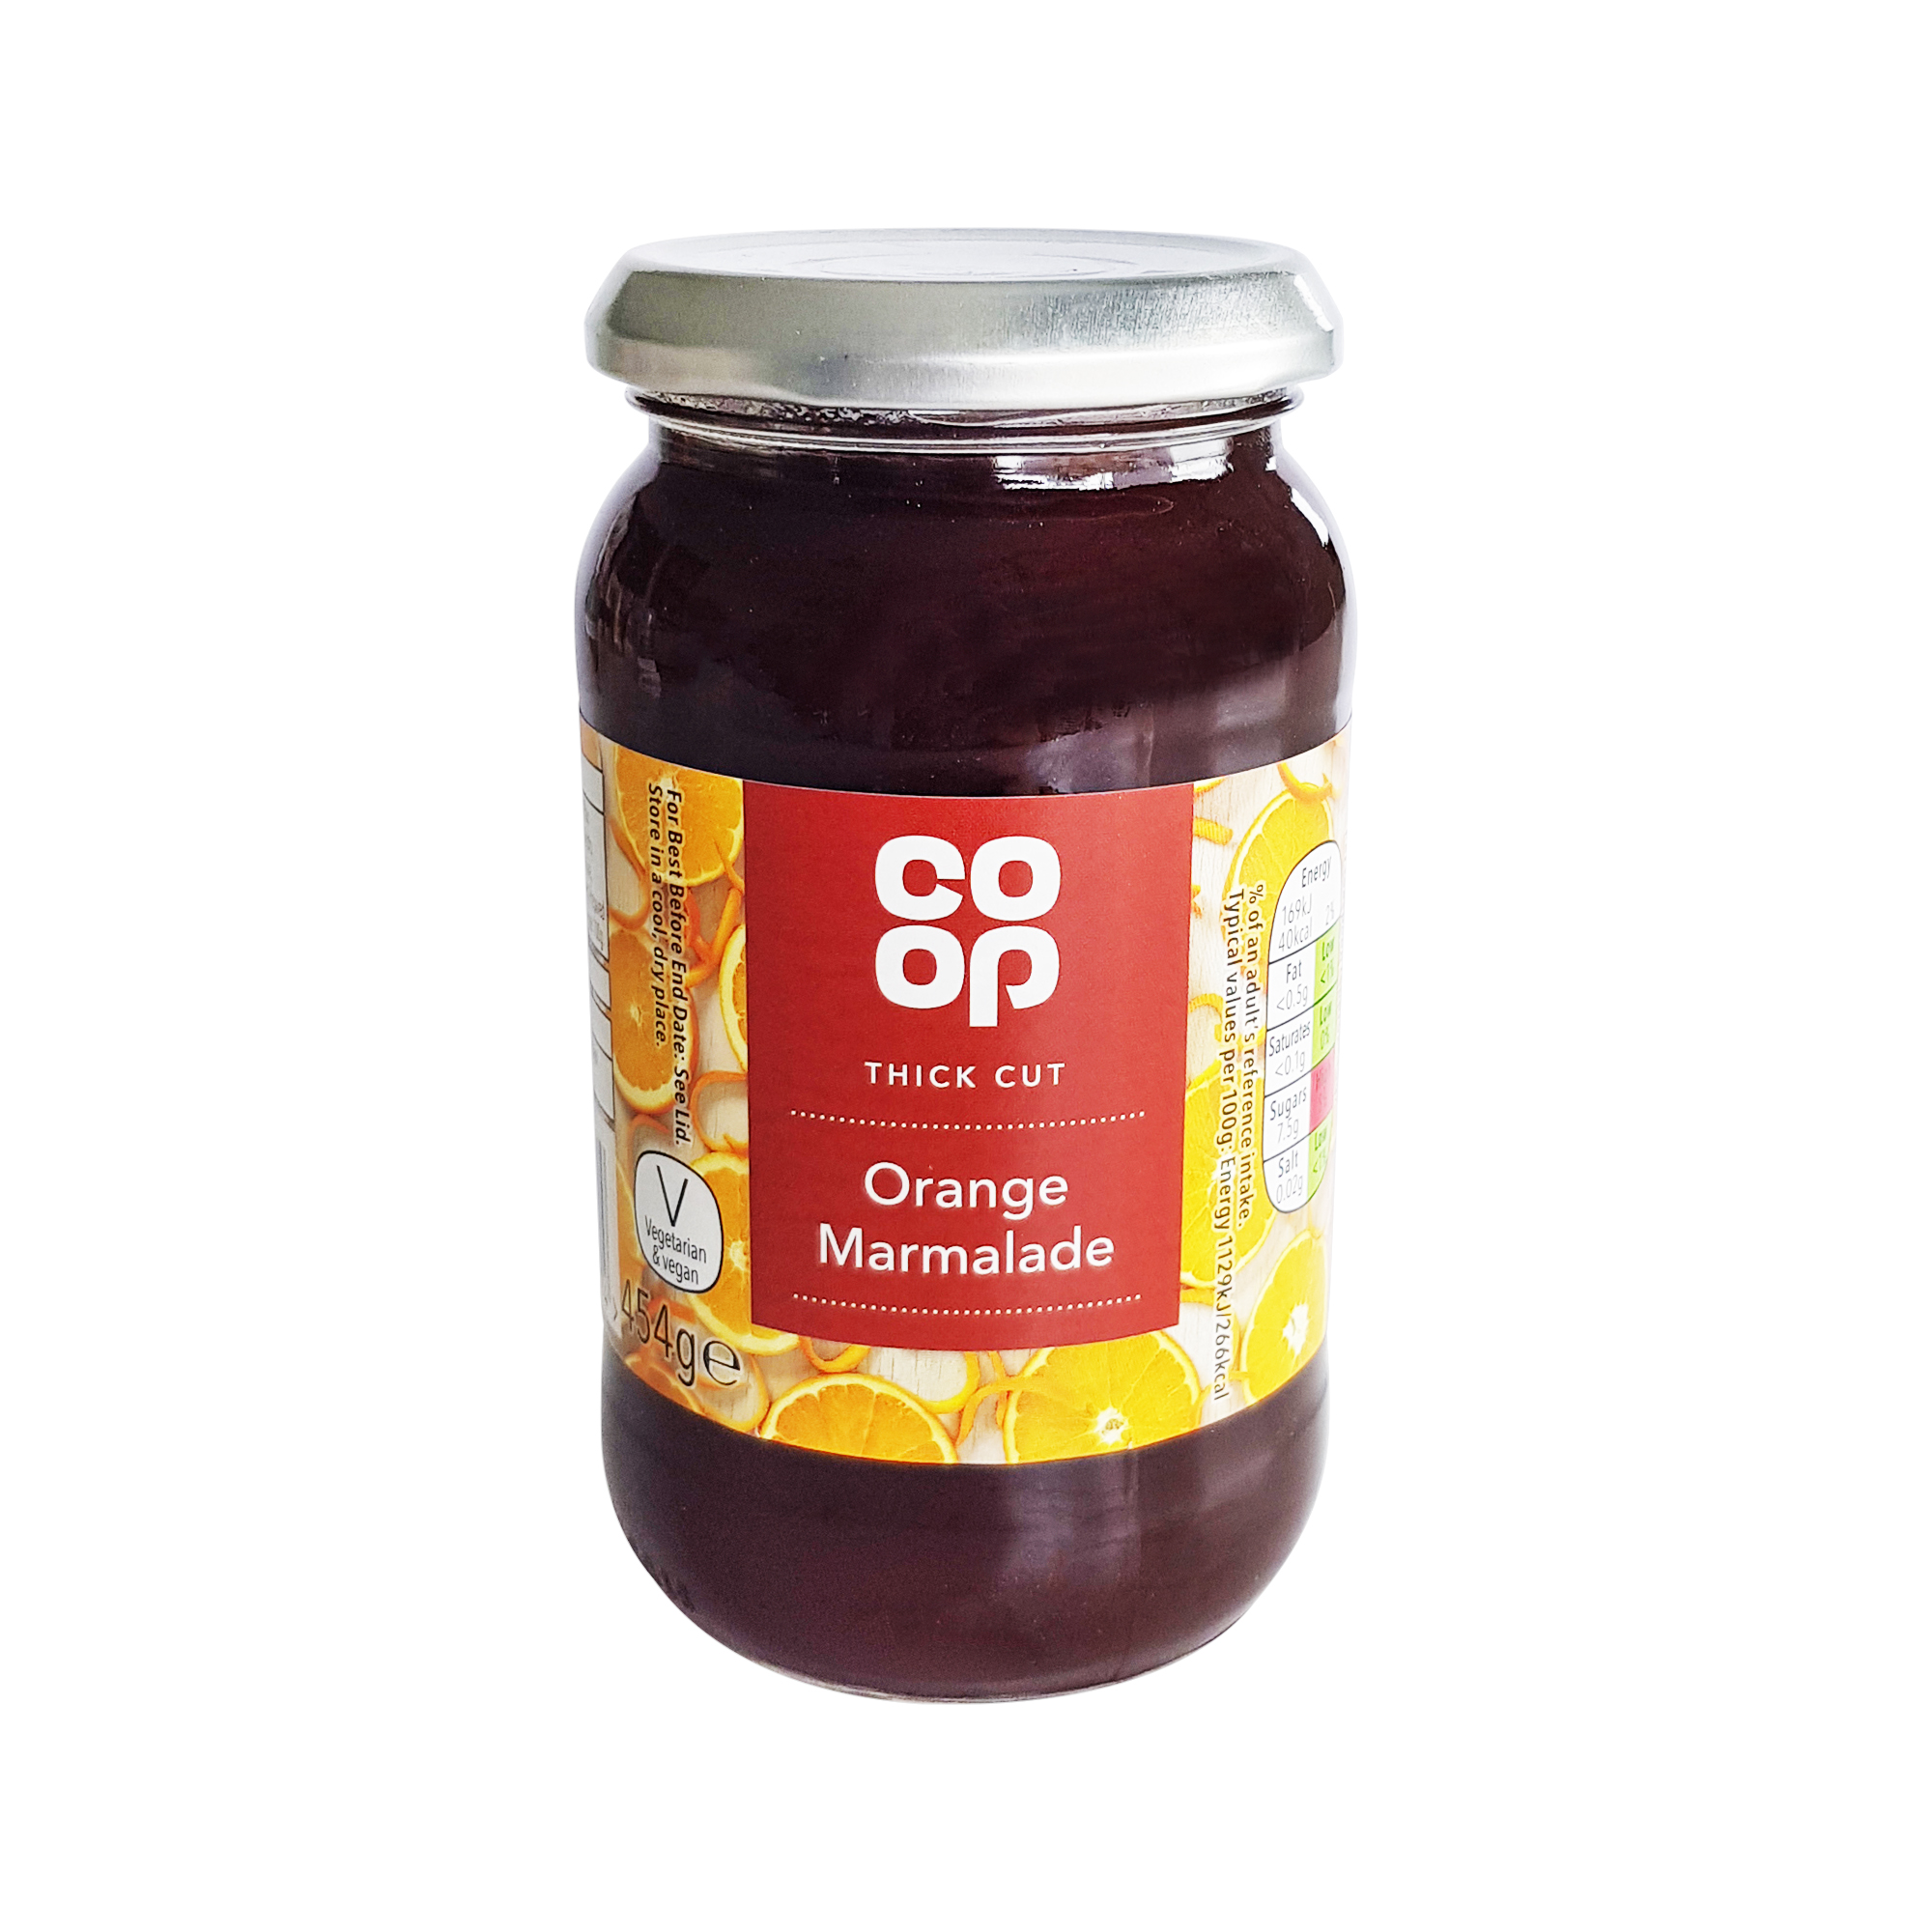 Co-op Thick Cut Orange Marmalade (454g)